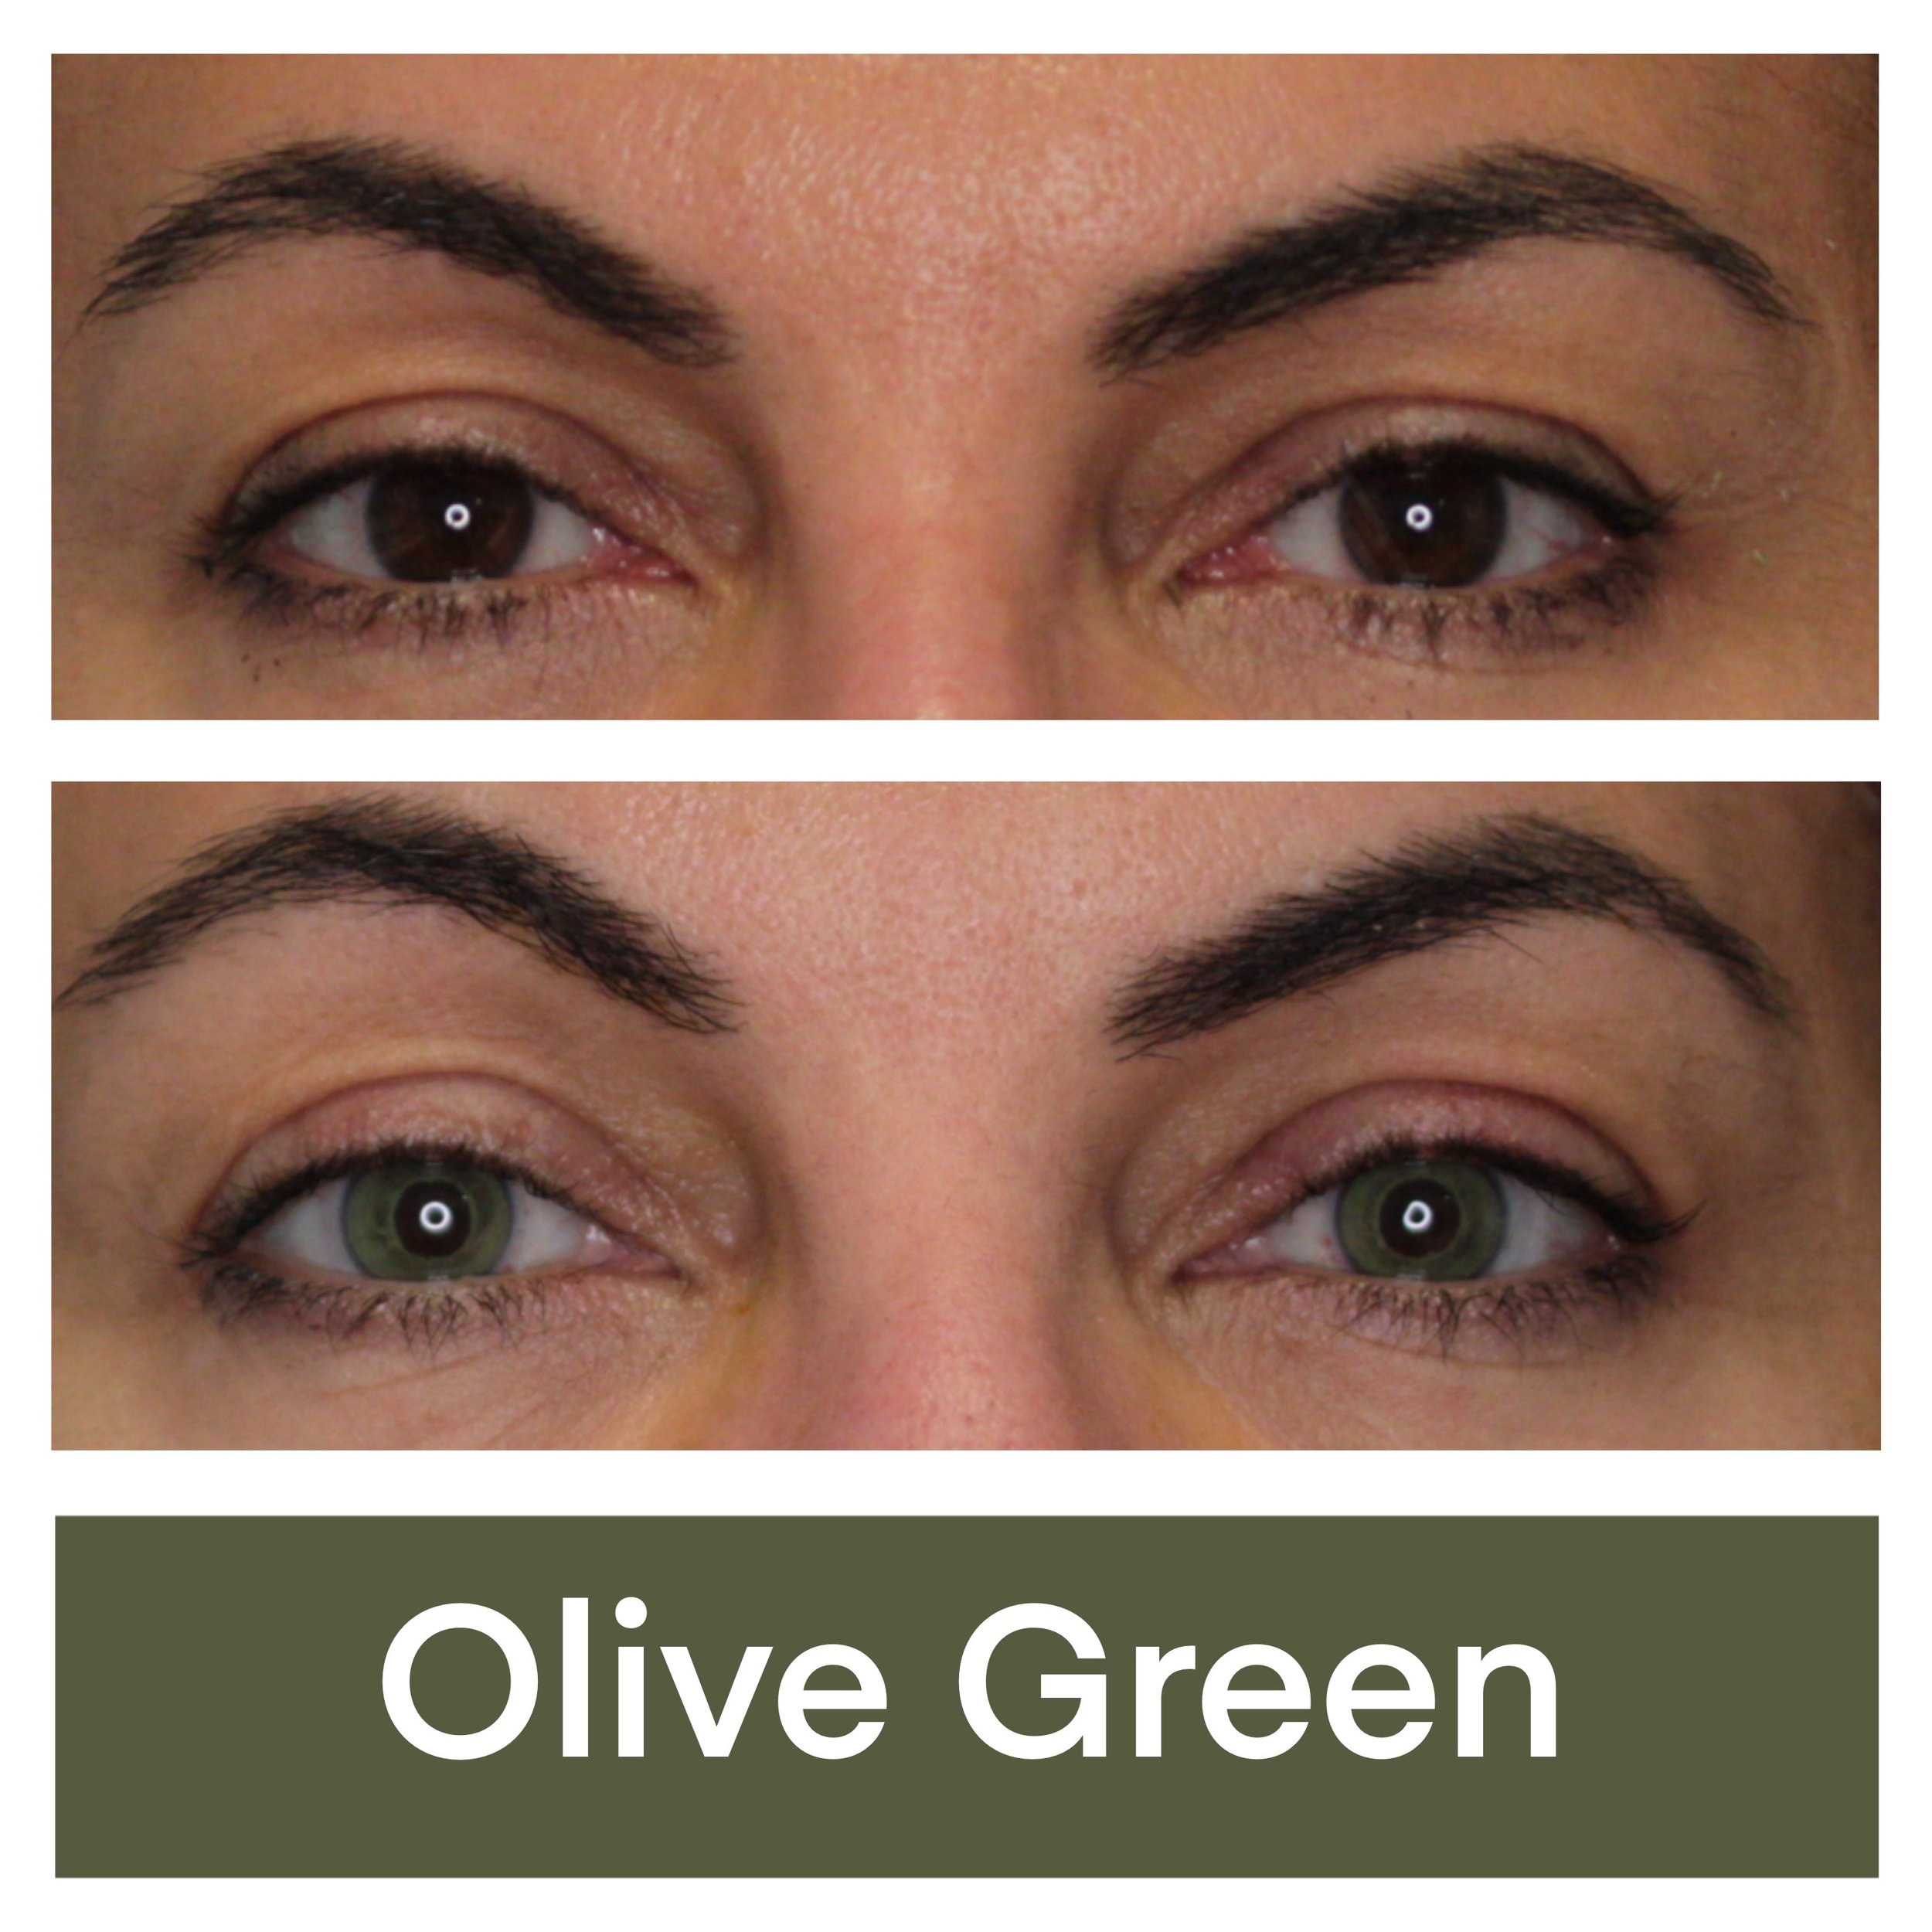 Kerato Procedure with Olive Green Pigment